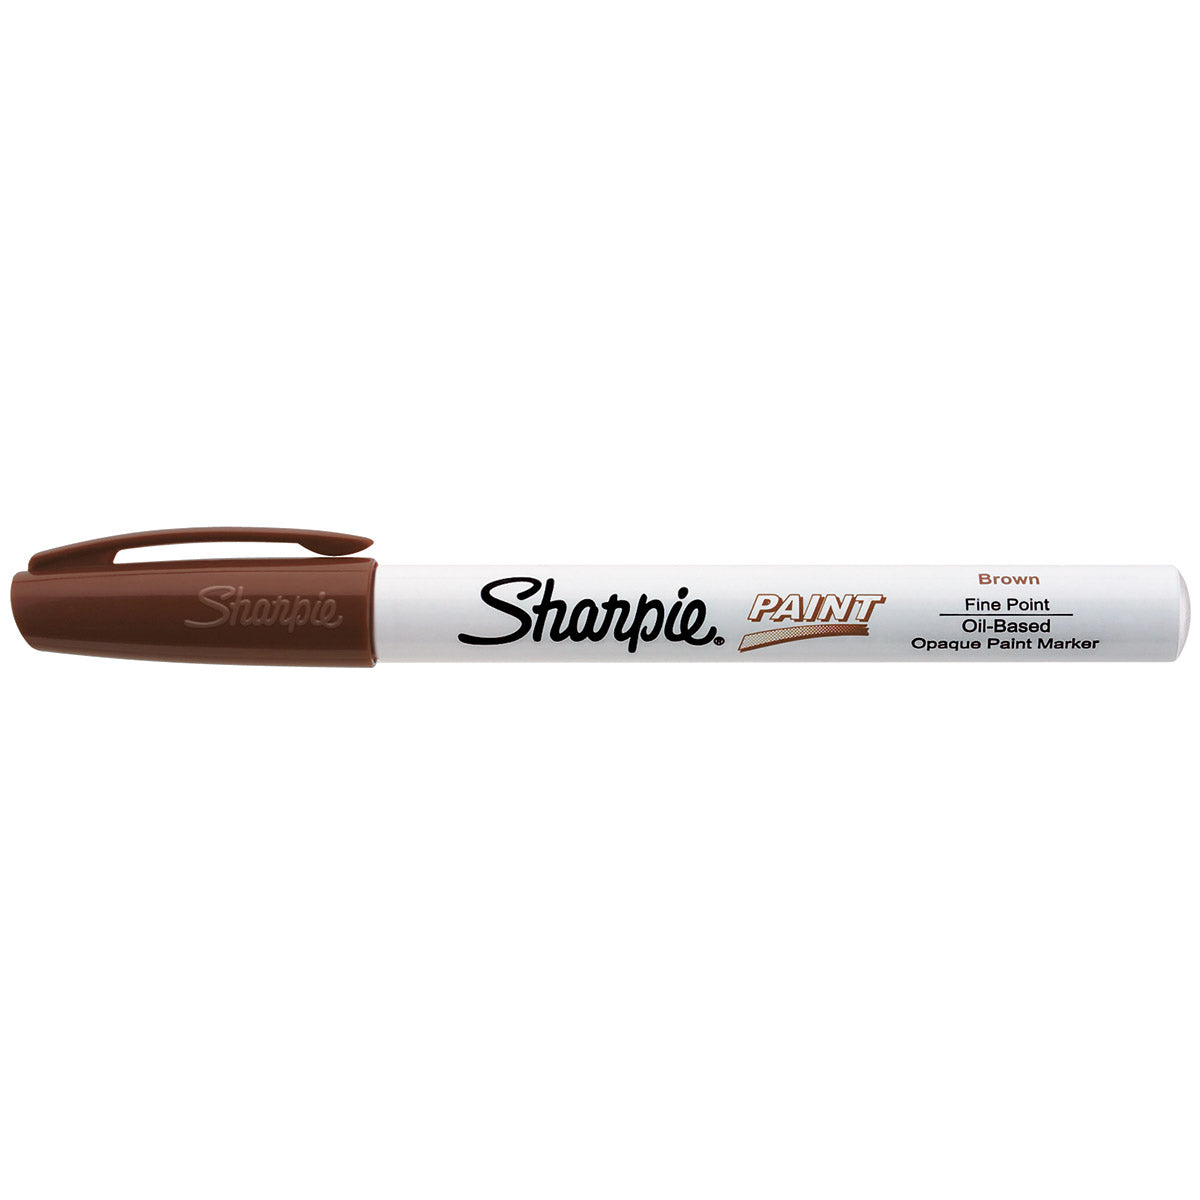 Sharpie Oil-Based Paint Marker - Brown, Fine Point